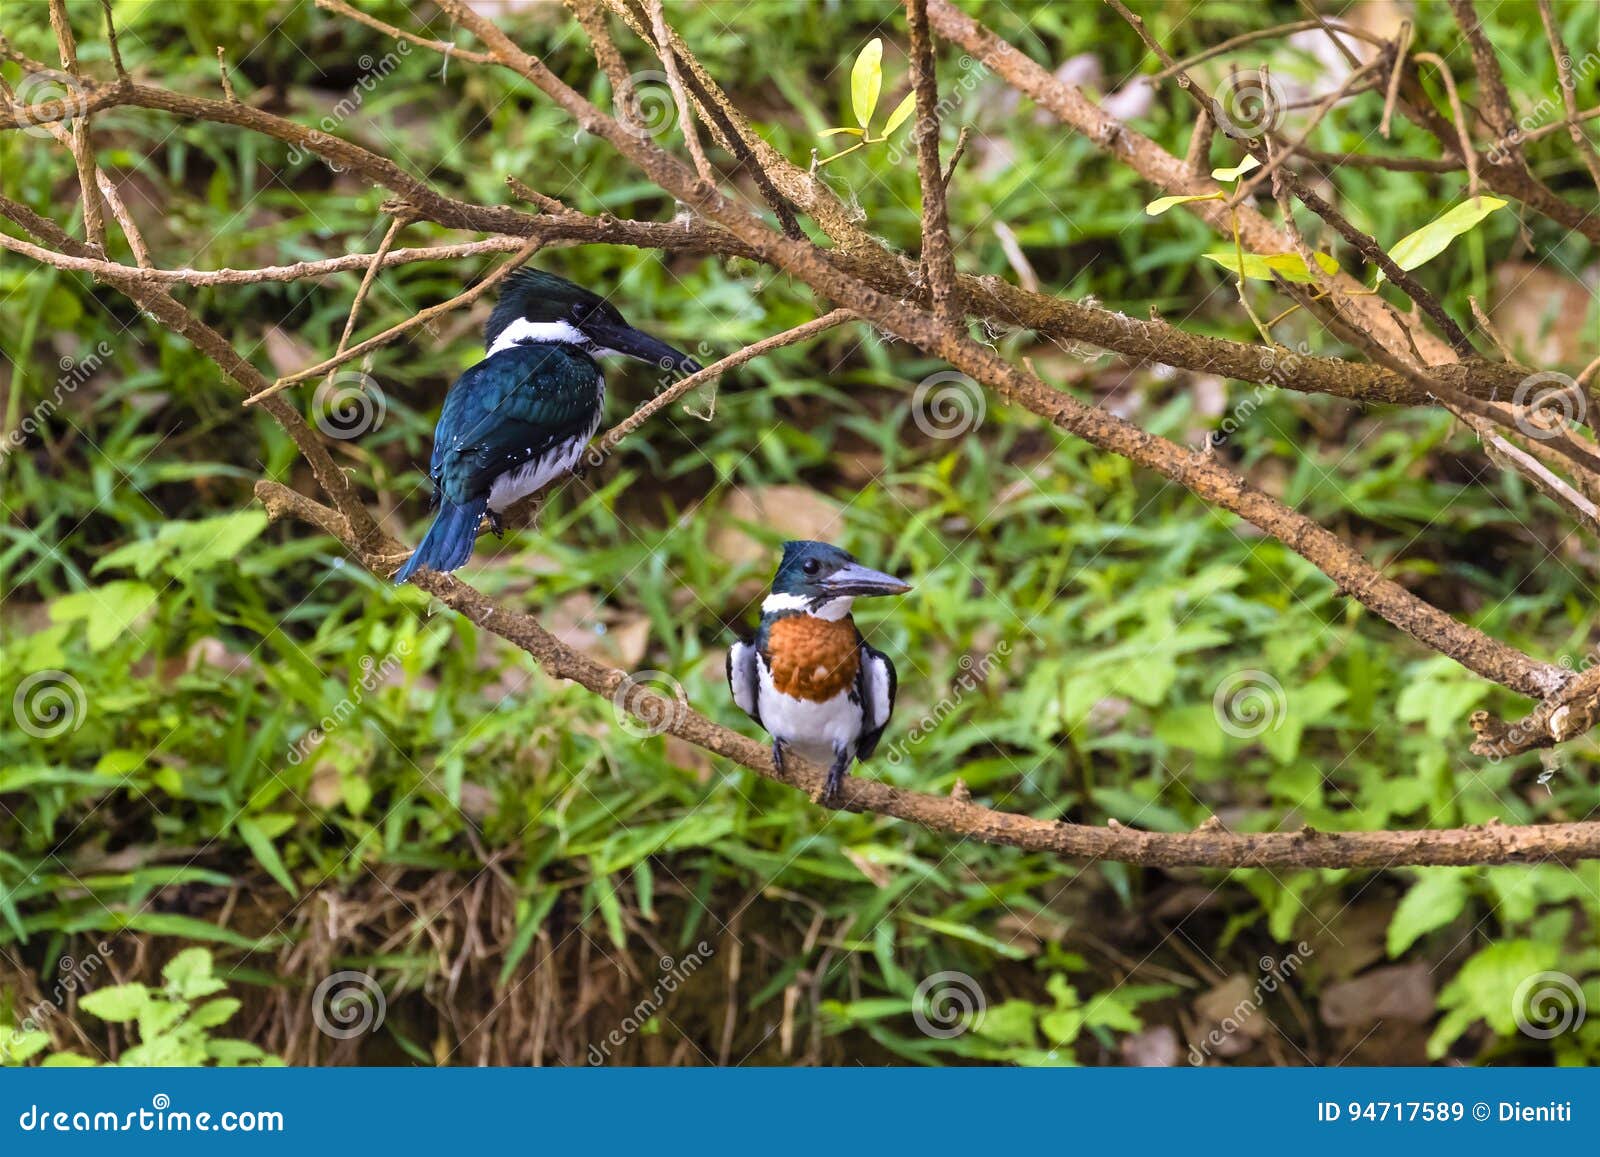 male and female amazon kingfisher - chloroceryle amazona